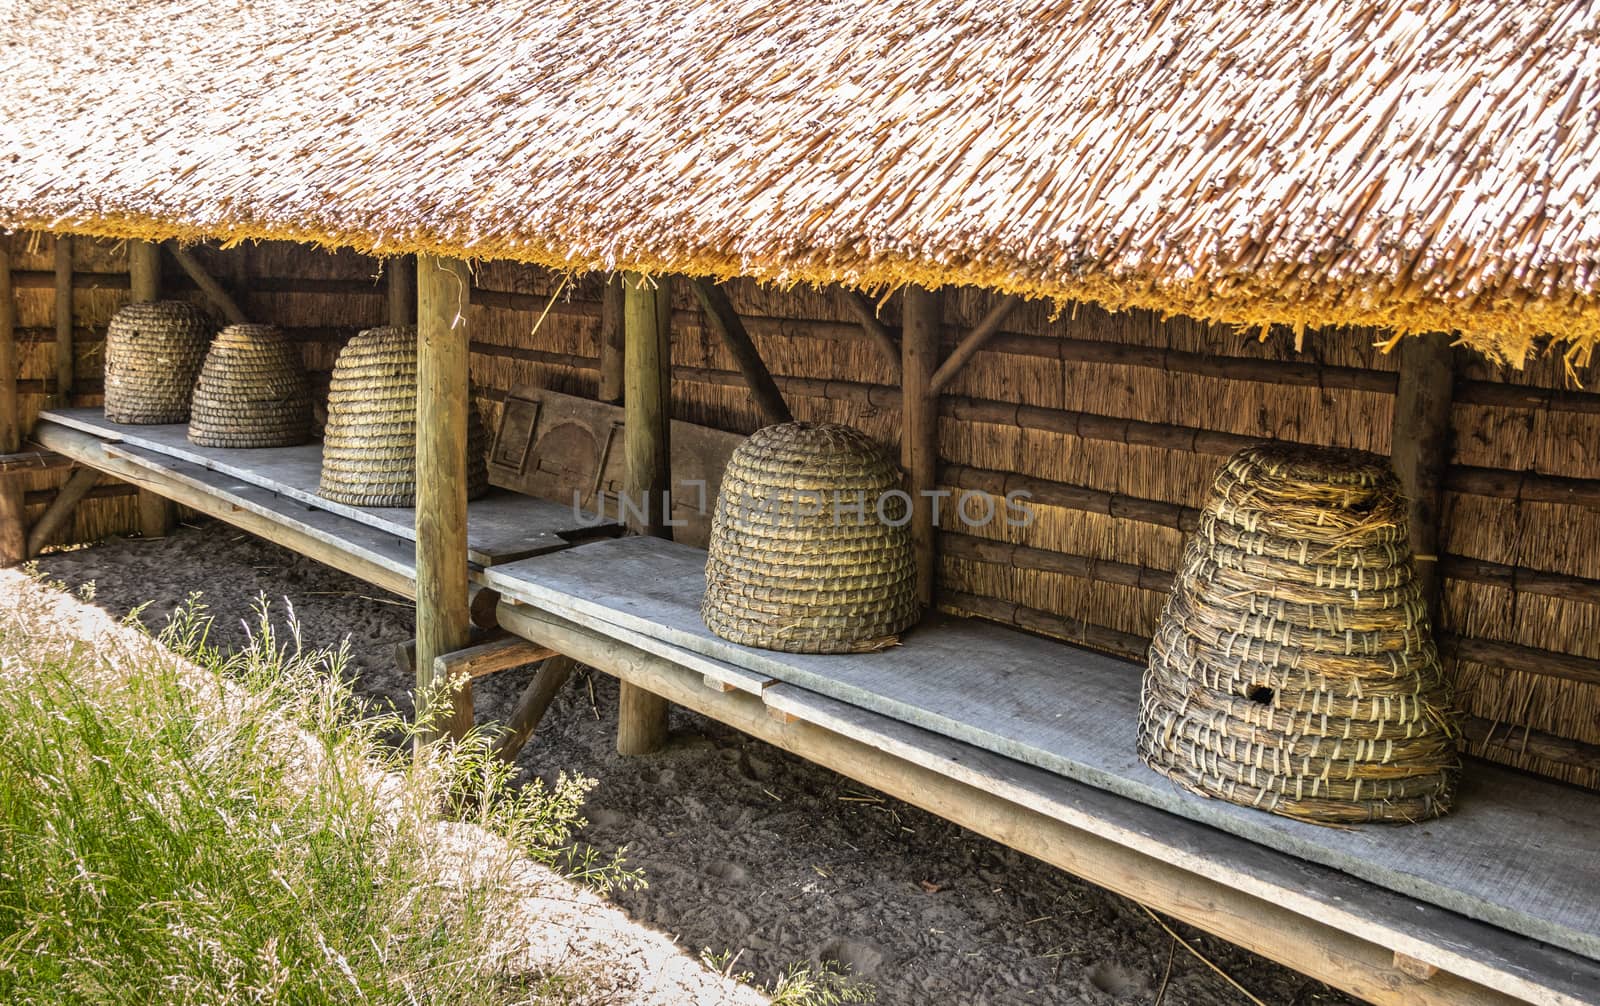 Line of large straw beehives, Bokrijk Belgium. by Claudine